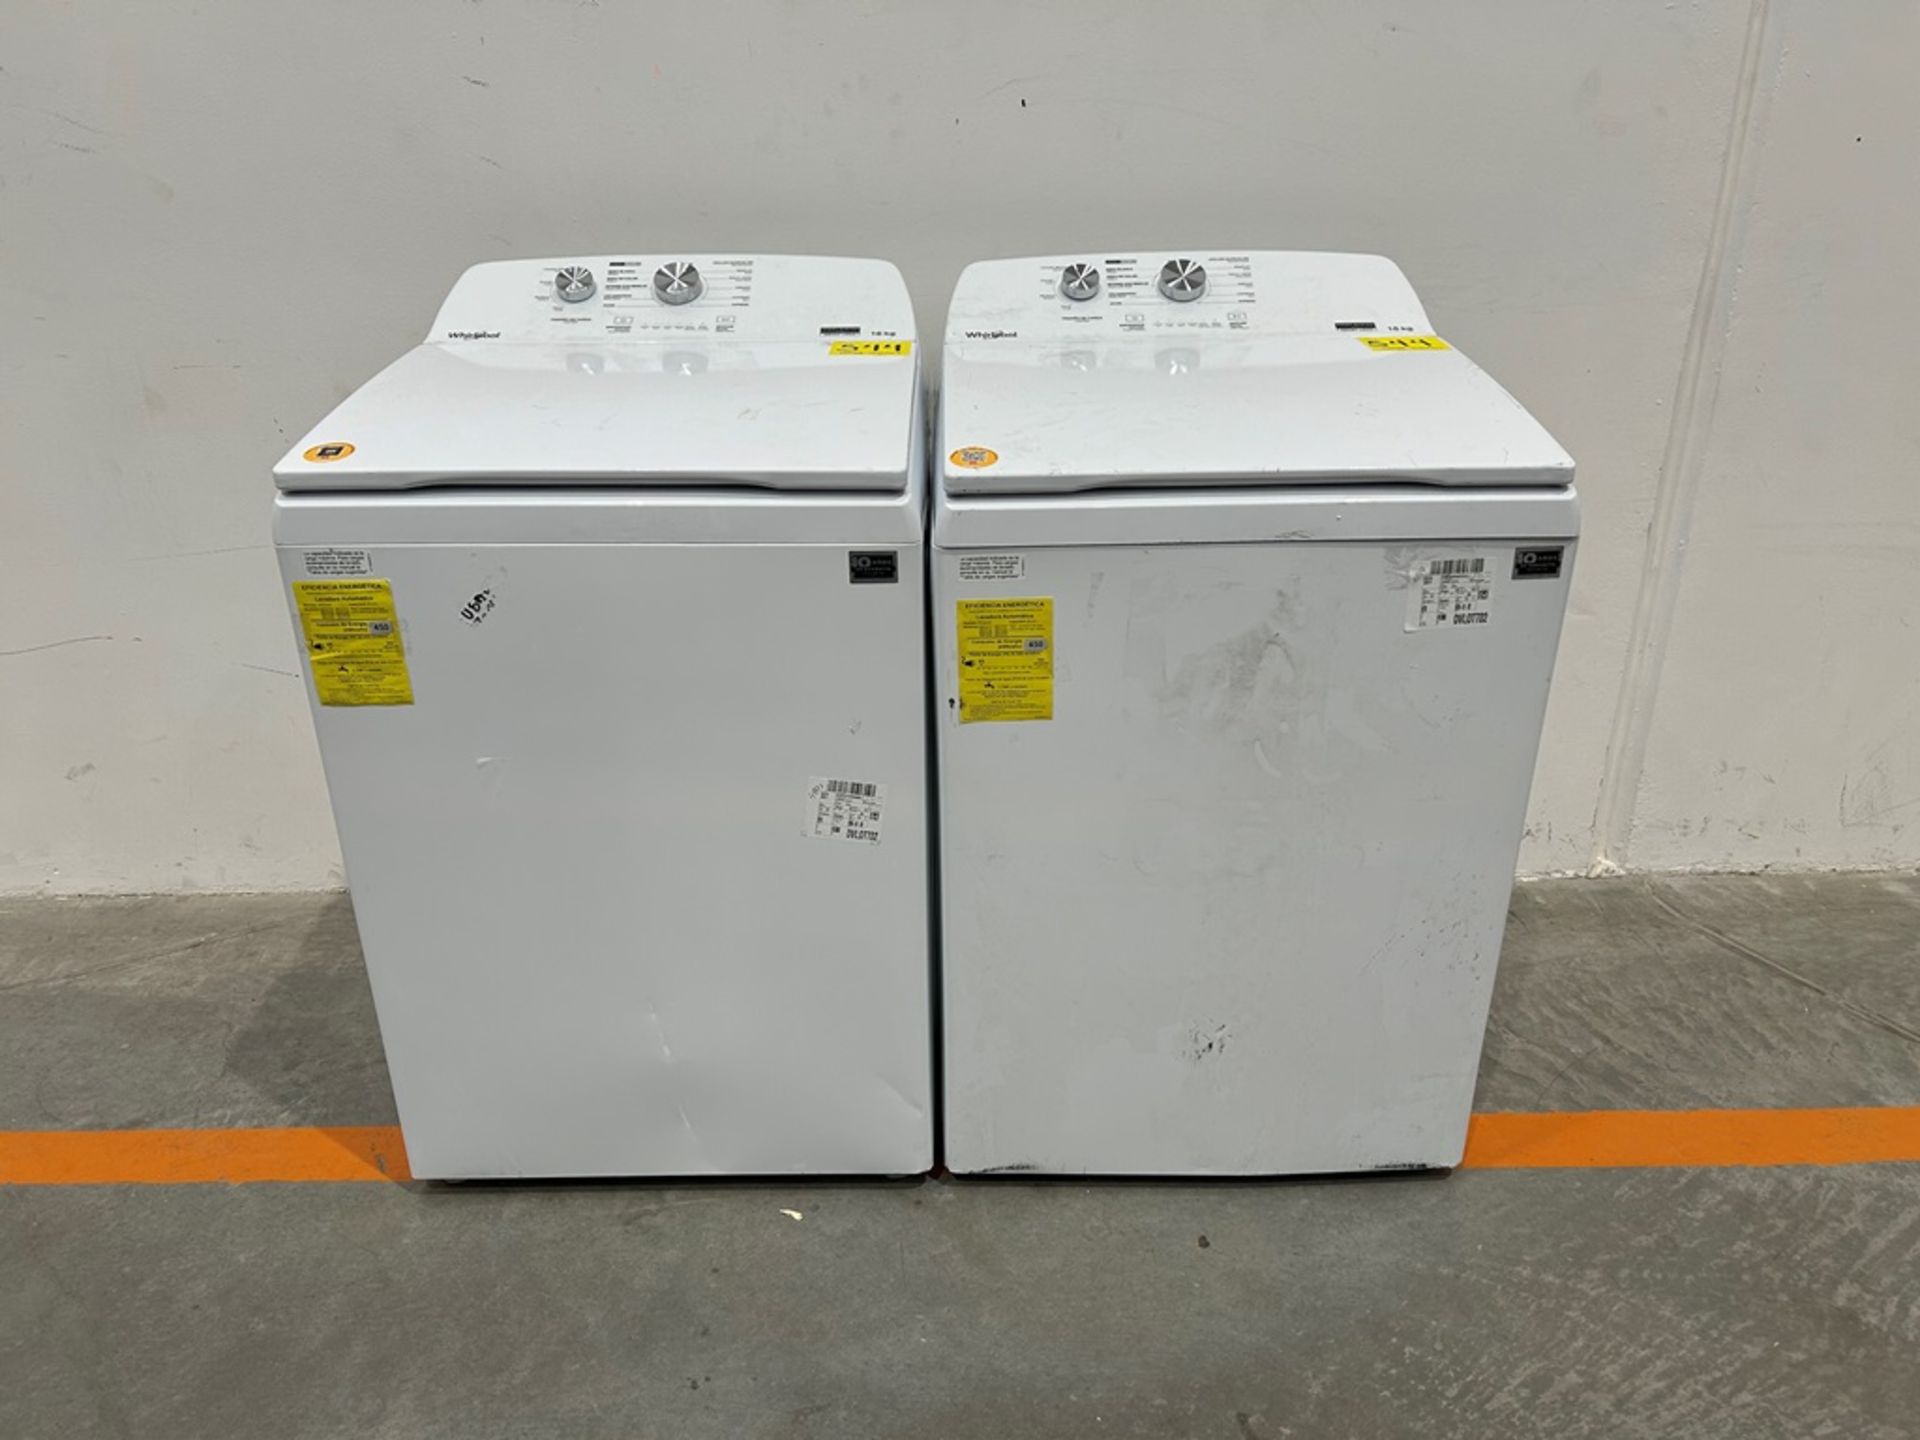 Lote de 2 lavadoras contiene: 1 Lavadora de 16KG Marca WHIRLPOOL, Modelo 8MWTW1612MJQ1